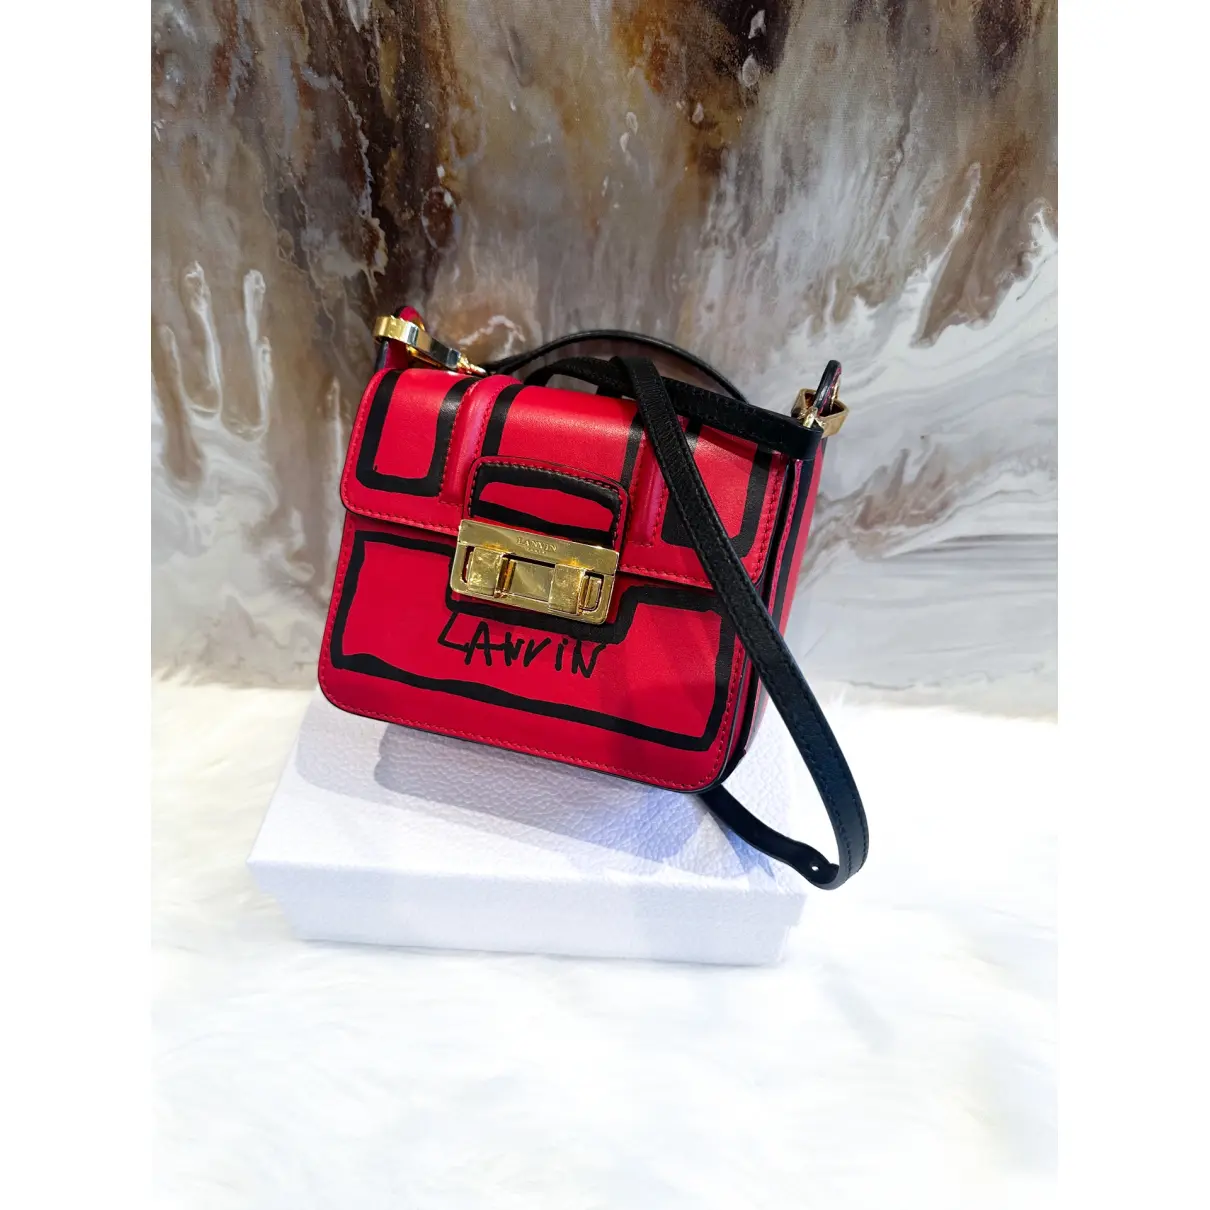 Buy Lanvin Jiji leather handbag online